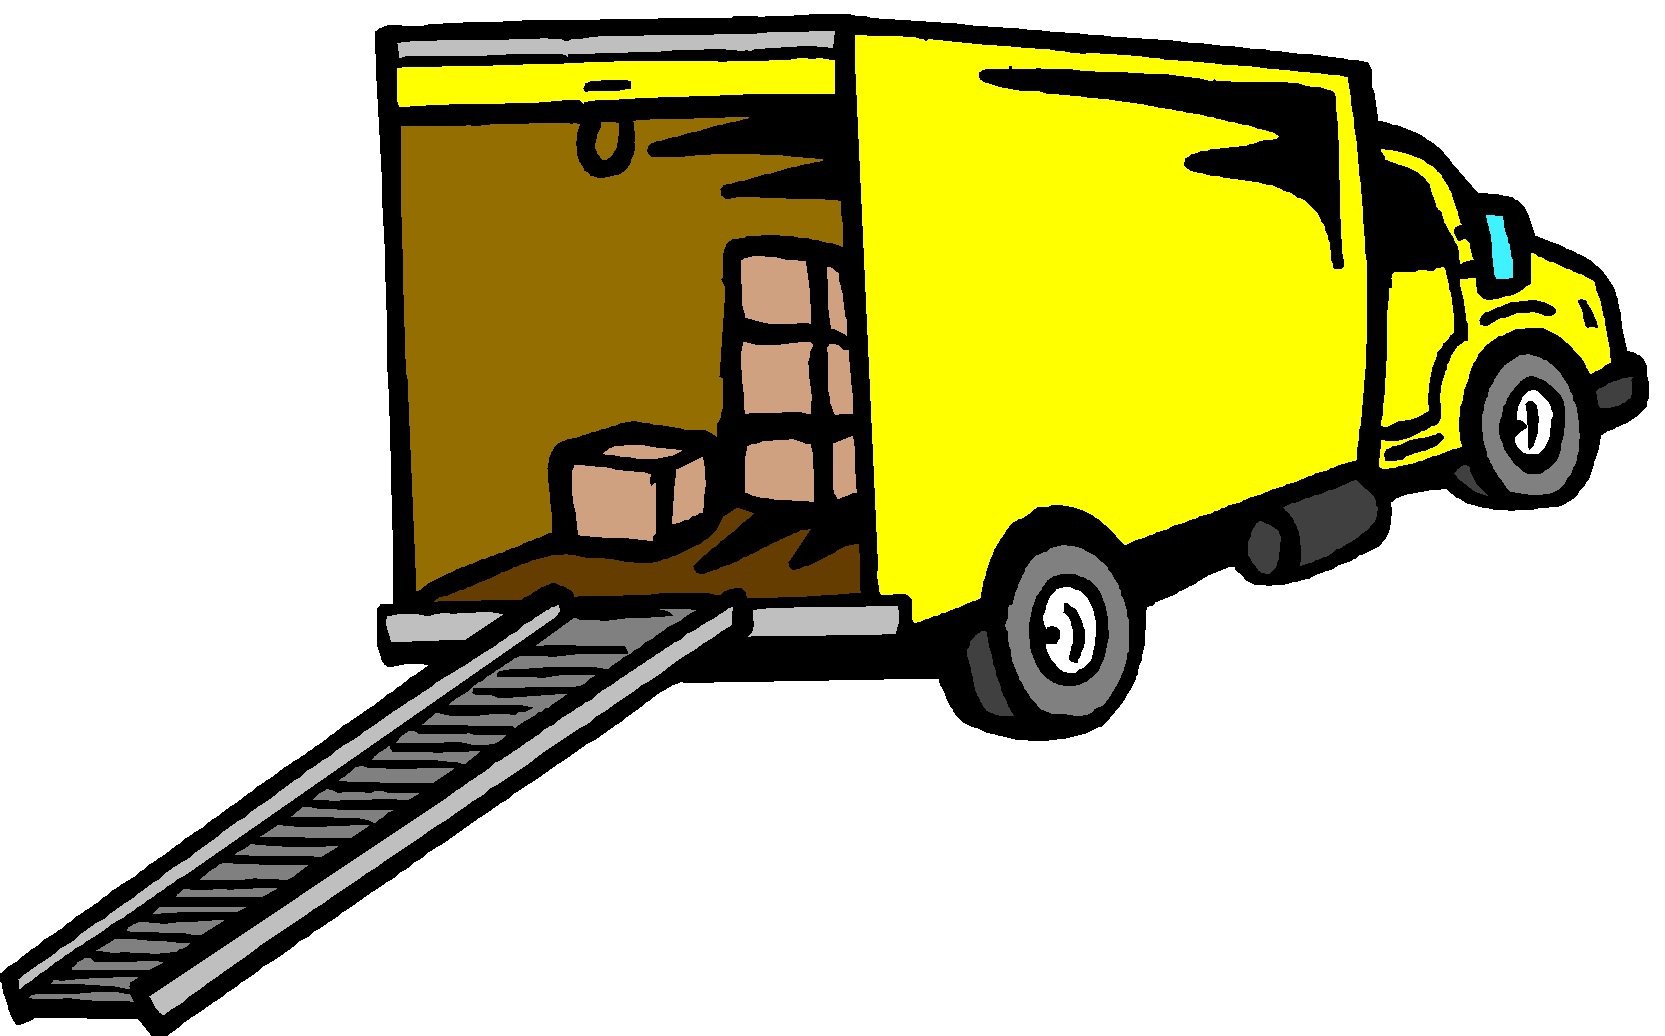 Moving truck clip art